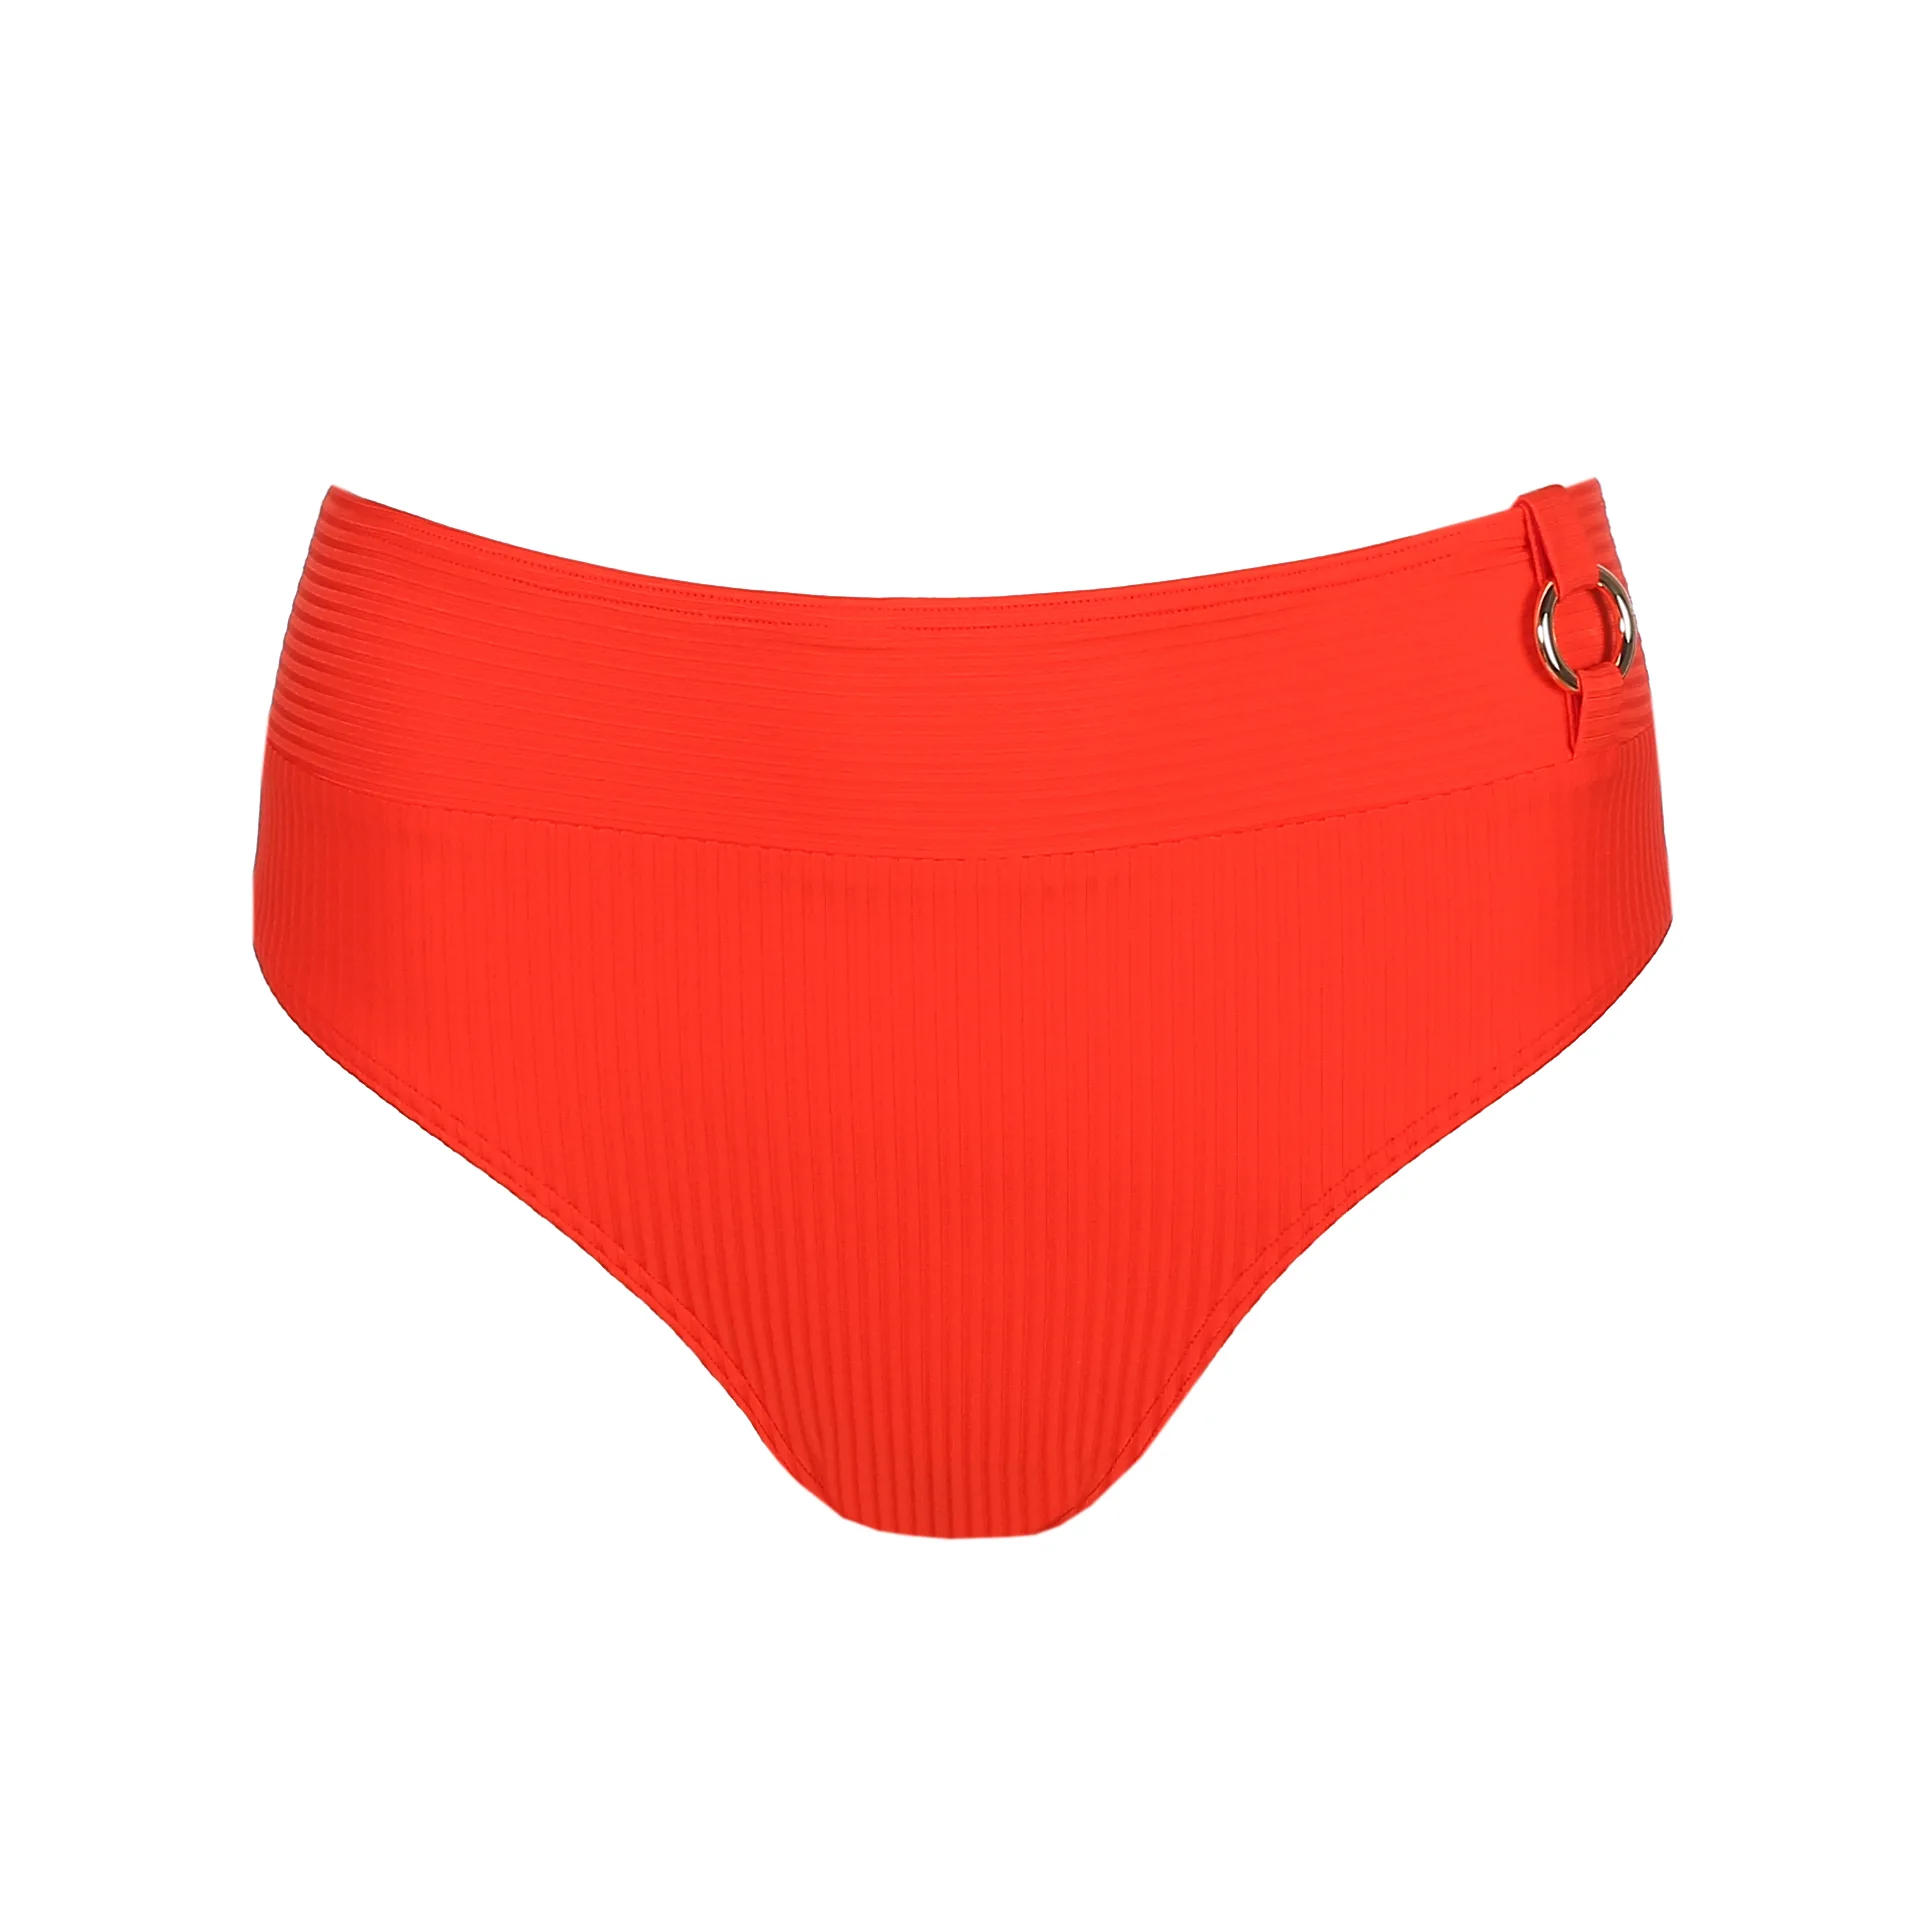 PrimaDonna Swim Sahara Red Pepper bikini full briefs | PrimaDonna ...